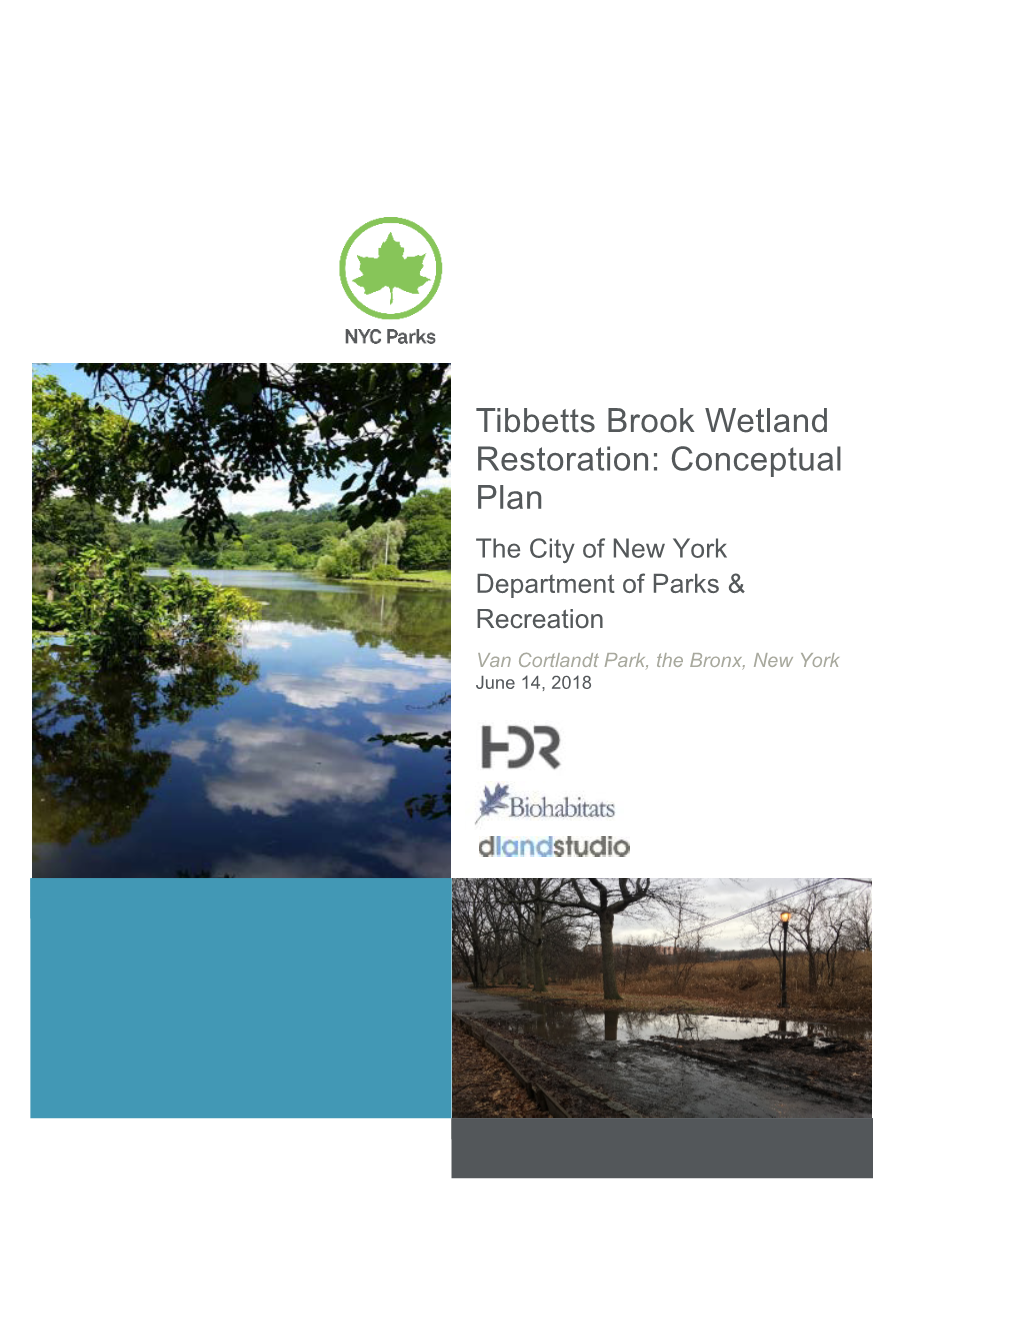 Tibbetts Brook Wetland Restoration: Conceptual Plan the City of New York Department of Parks & Recreation Van Cortlandt Park, the Bronx, New York June 14, 2018